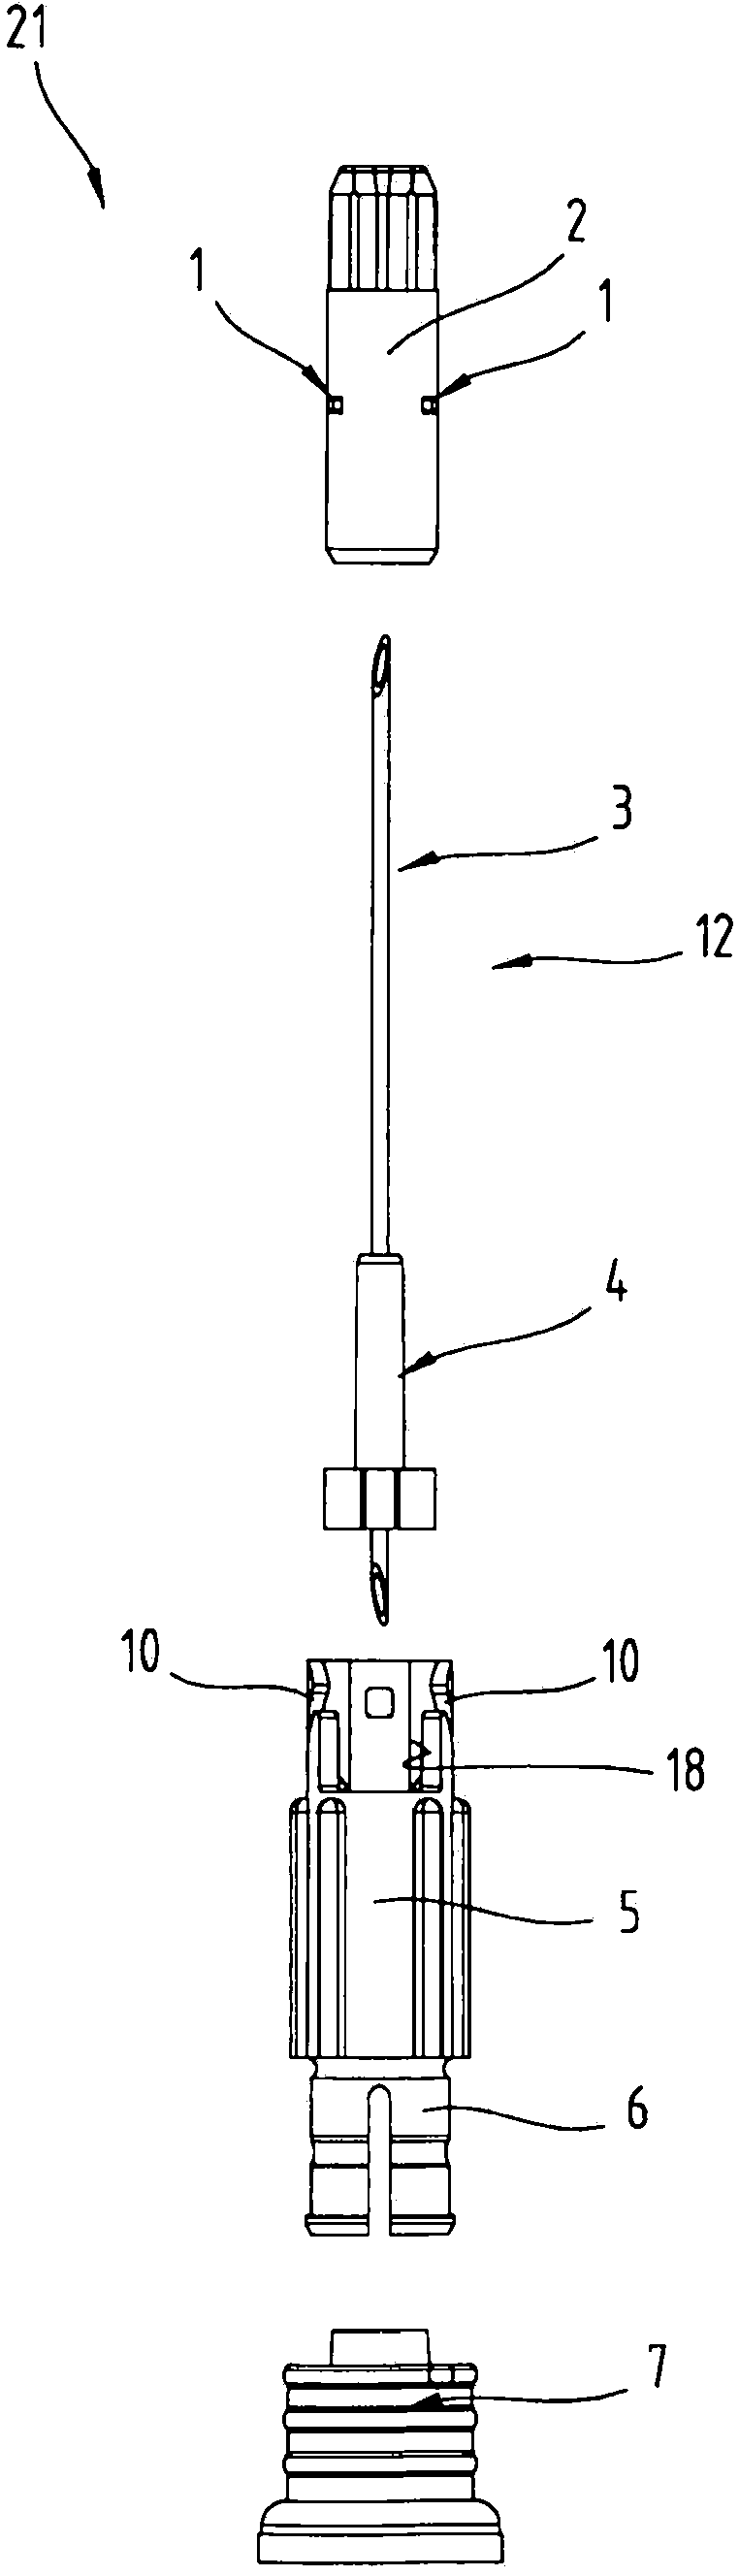 Syringe head, ejector unit, and syringe formed from same